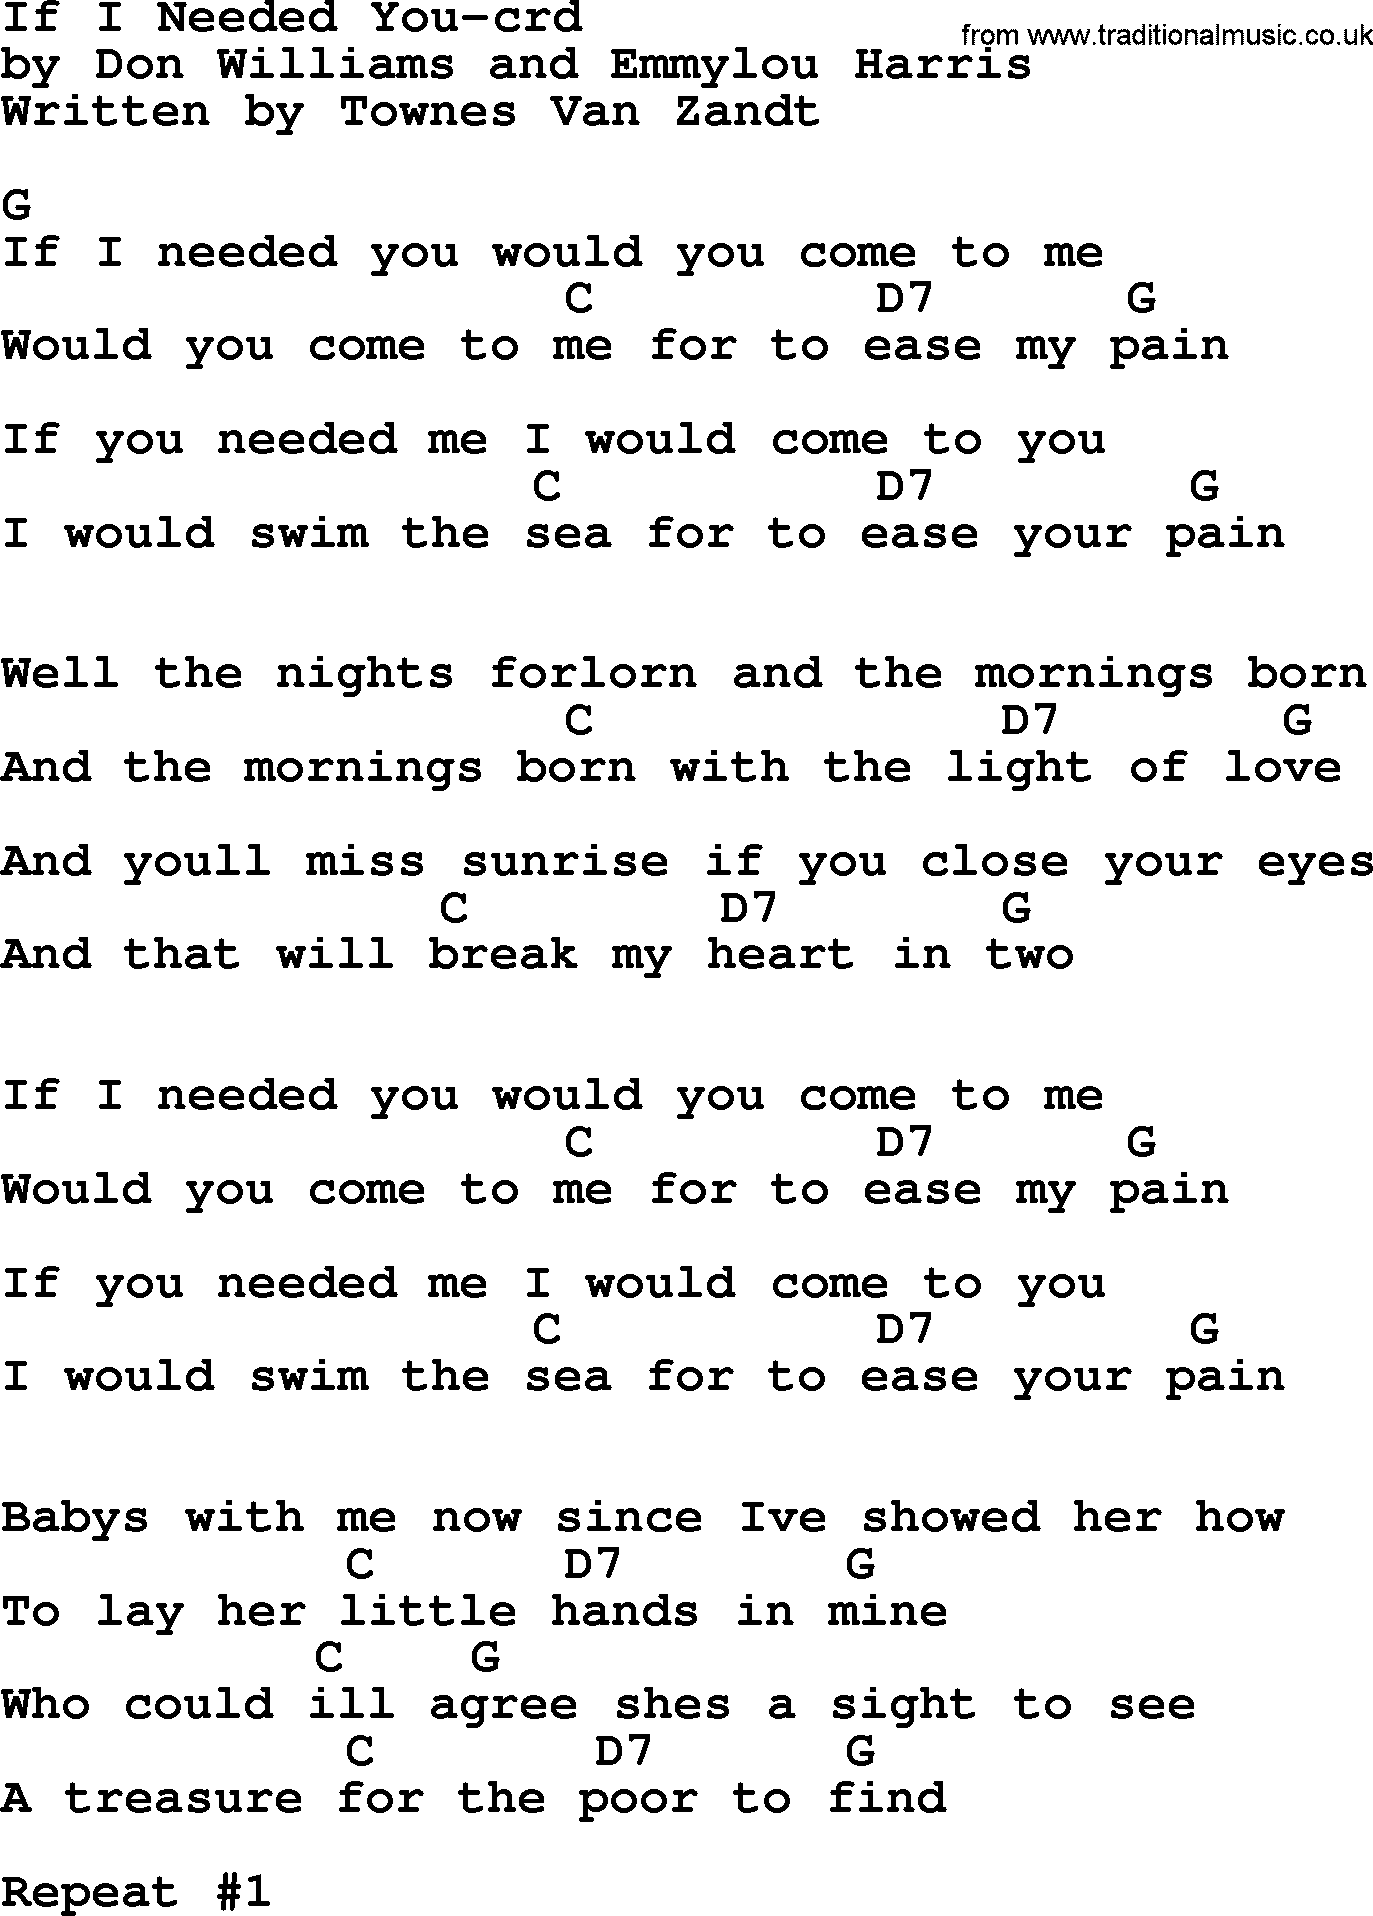 Emmylou Harris song: If I Needed You lyrics and chords